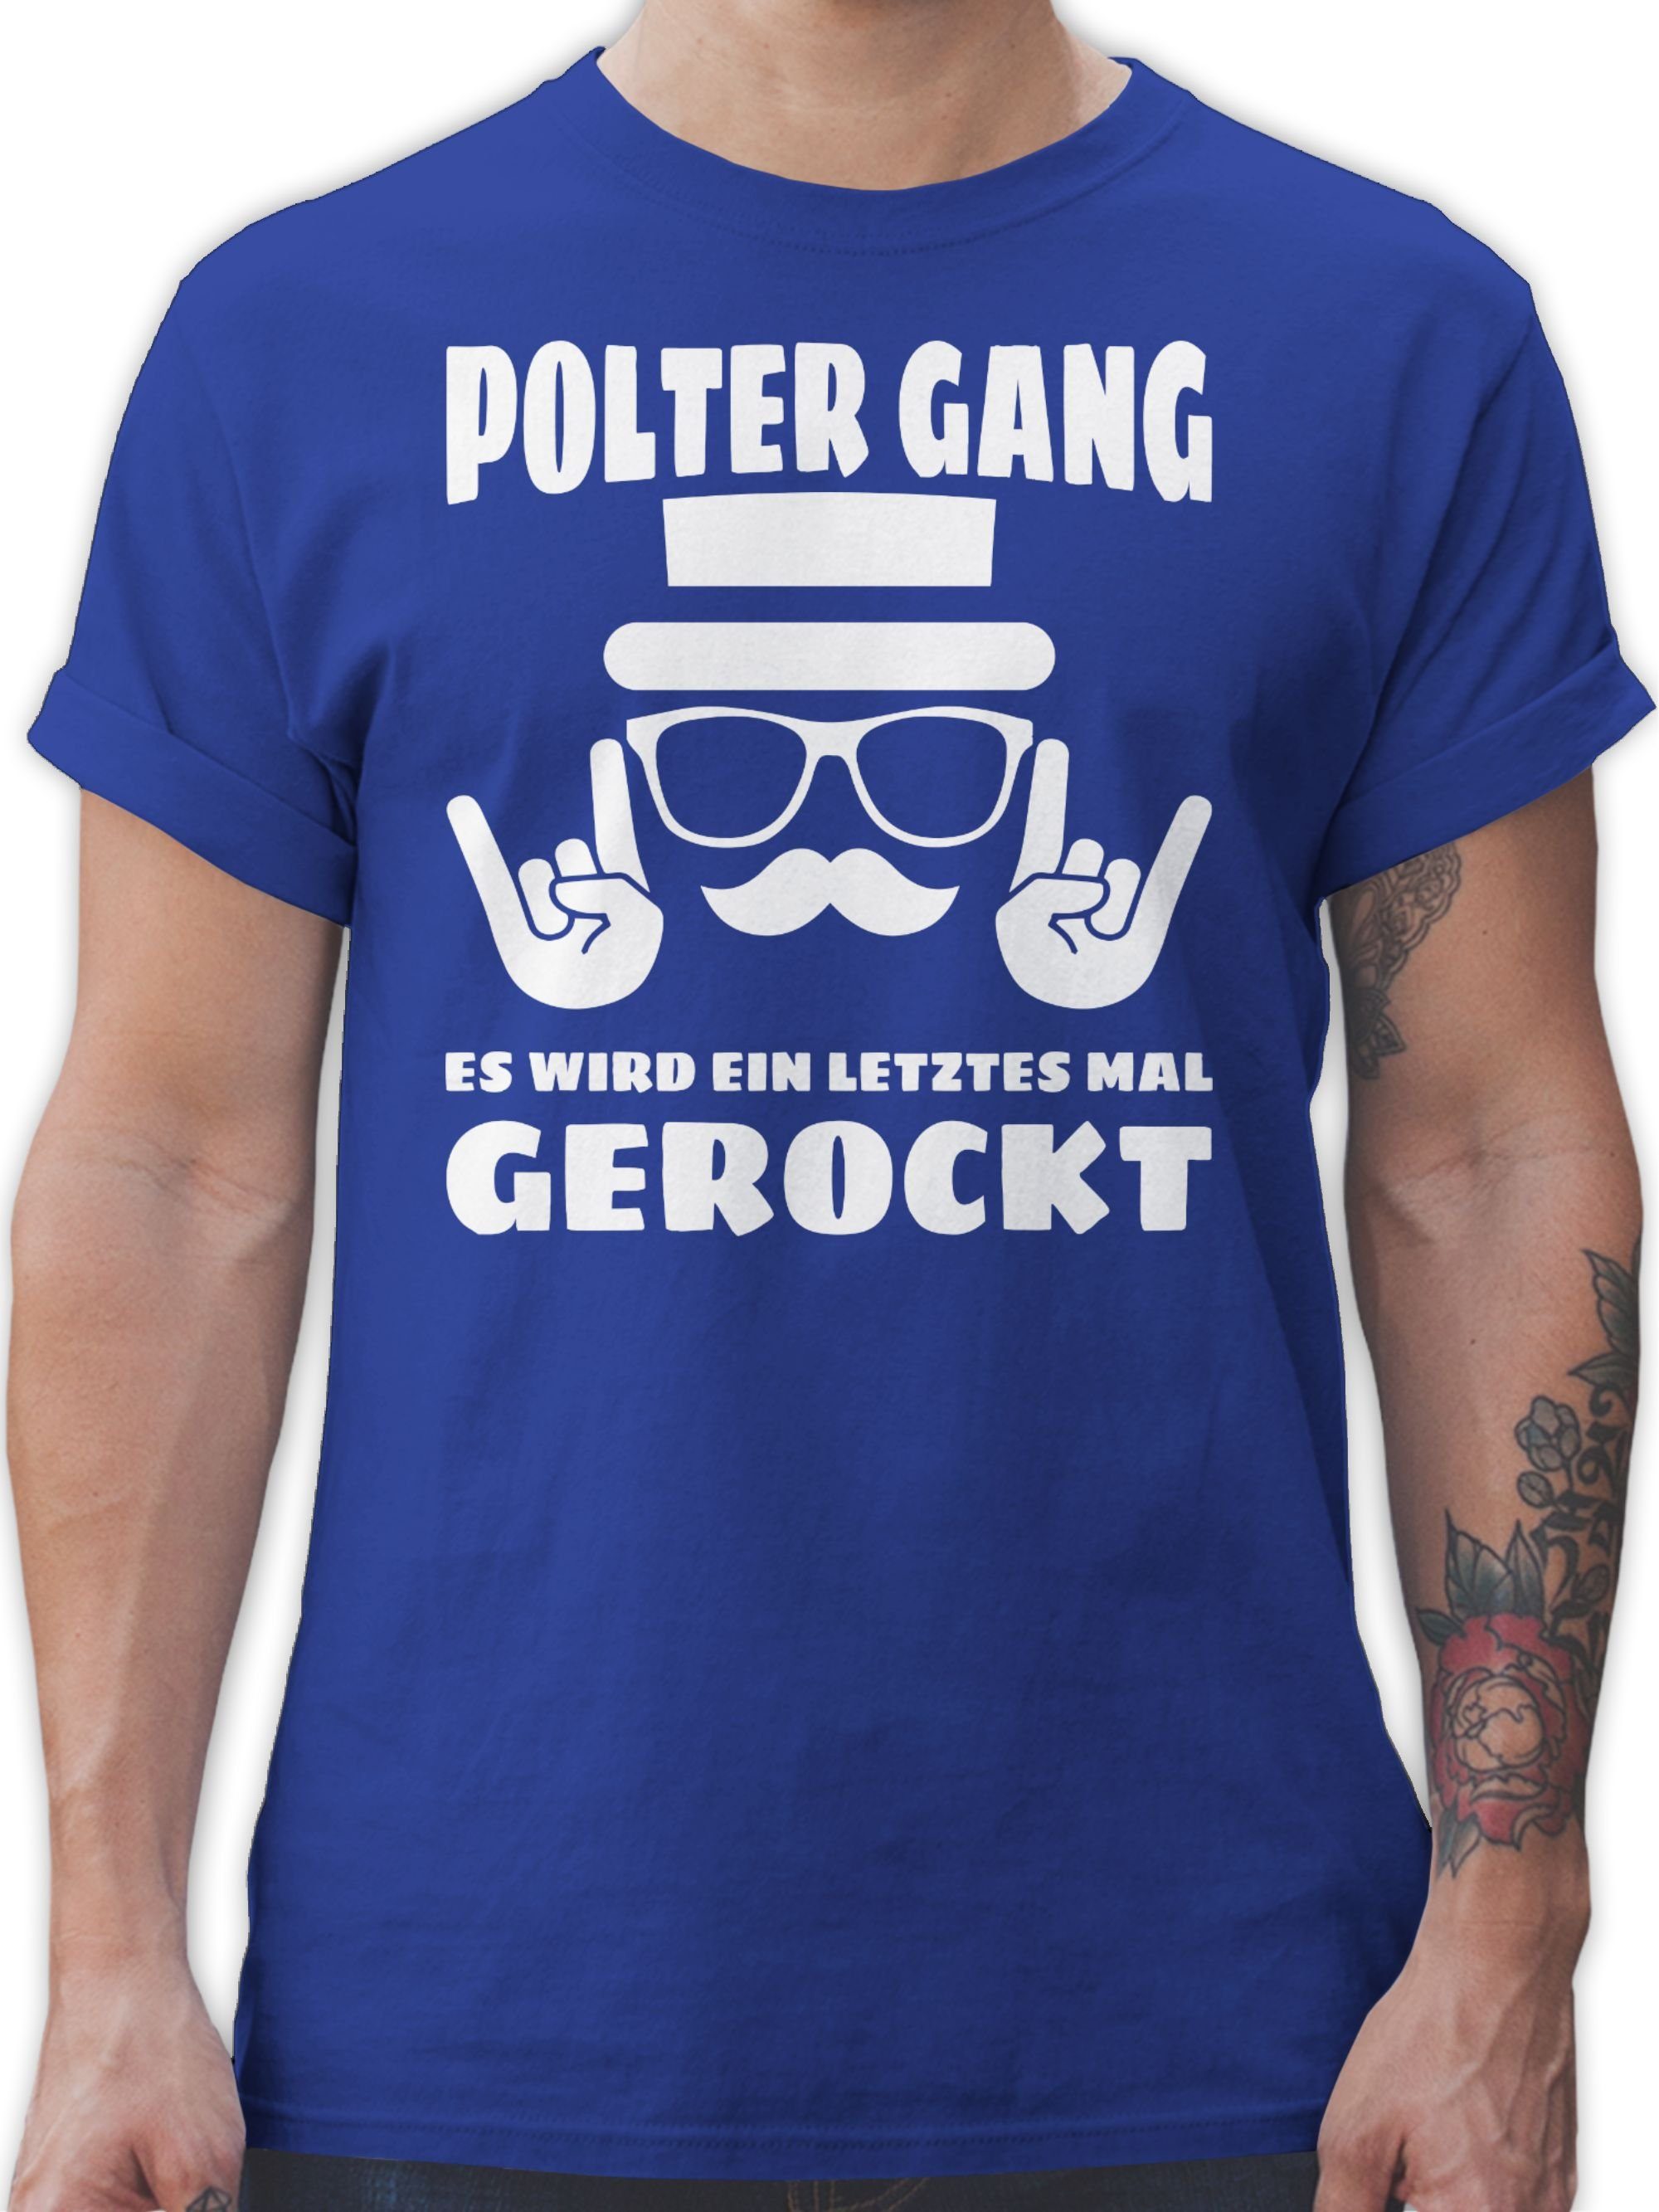 gerockt Männer letztes JGA Mal - T-Shirt 3 Polter Gang Shirtracer Royalblau